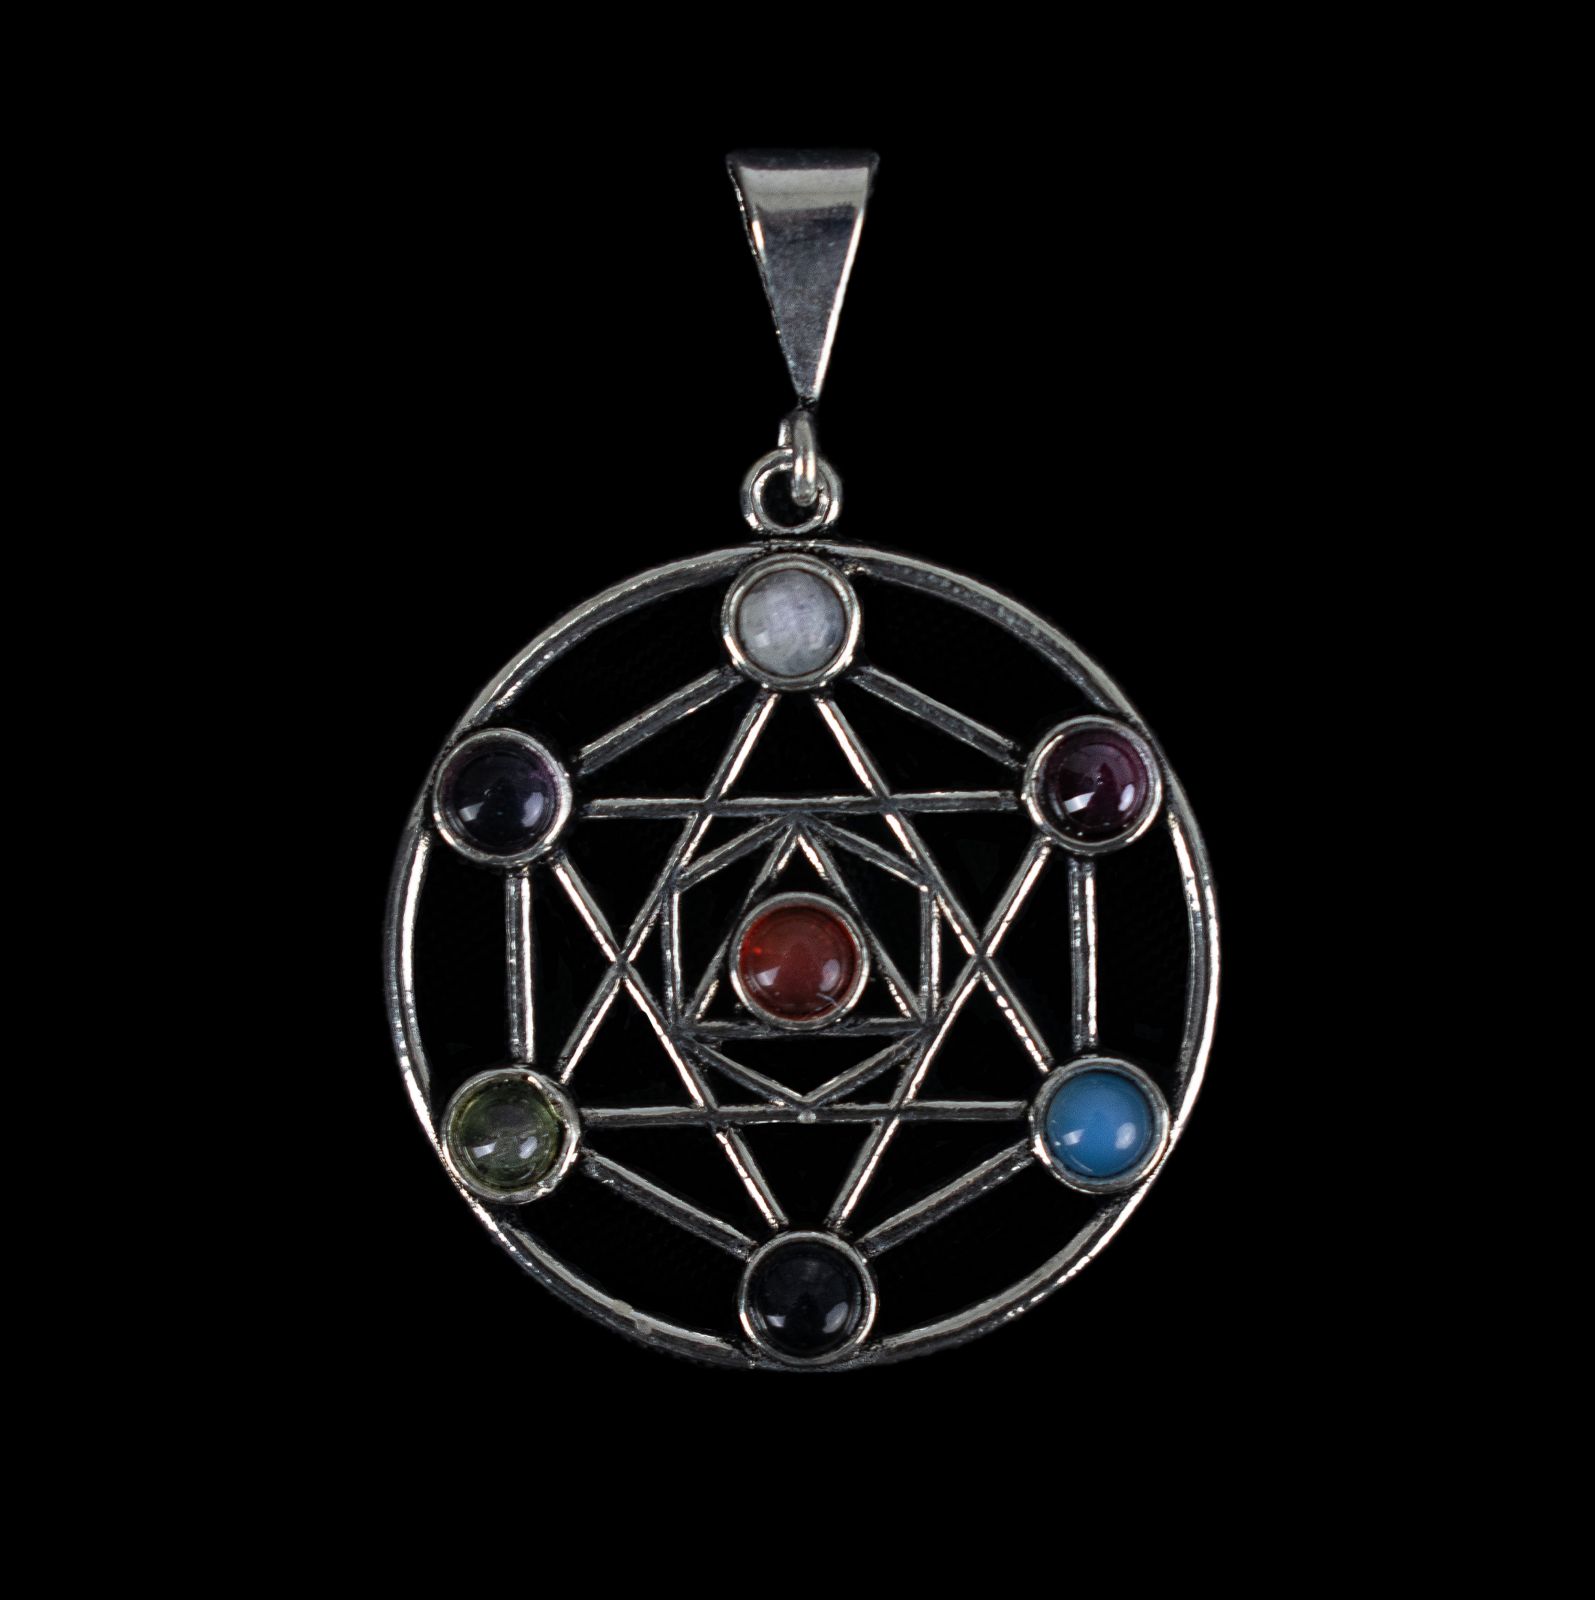 German silver pendant with seven chakras Merkaba and Chakras 2 India